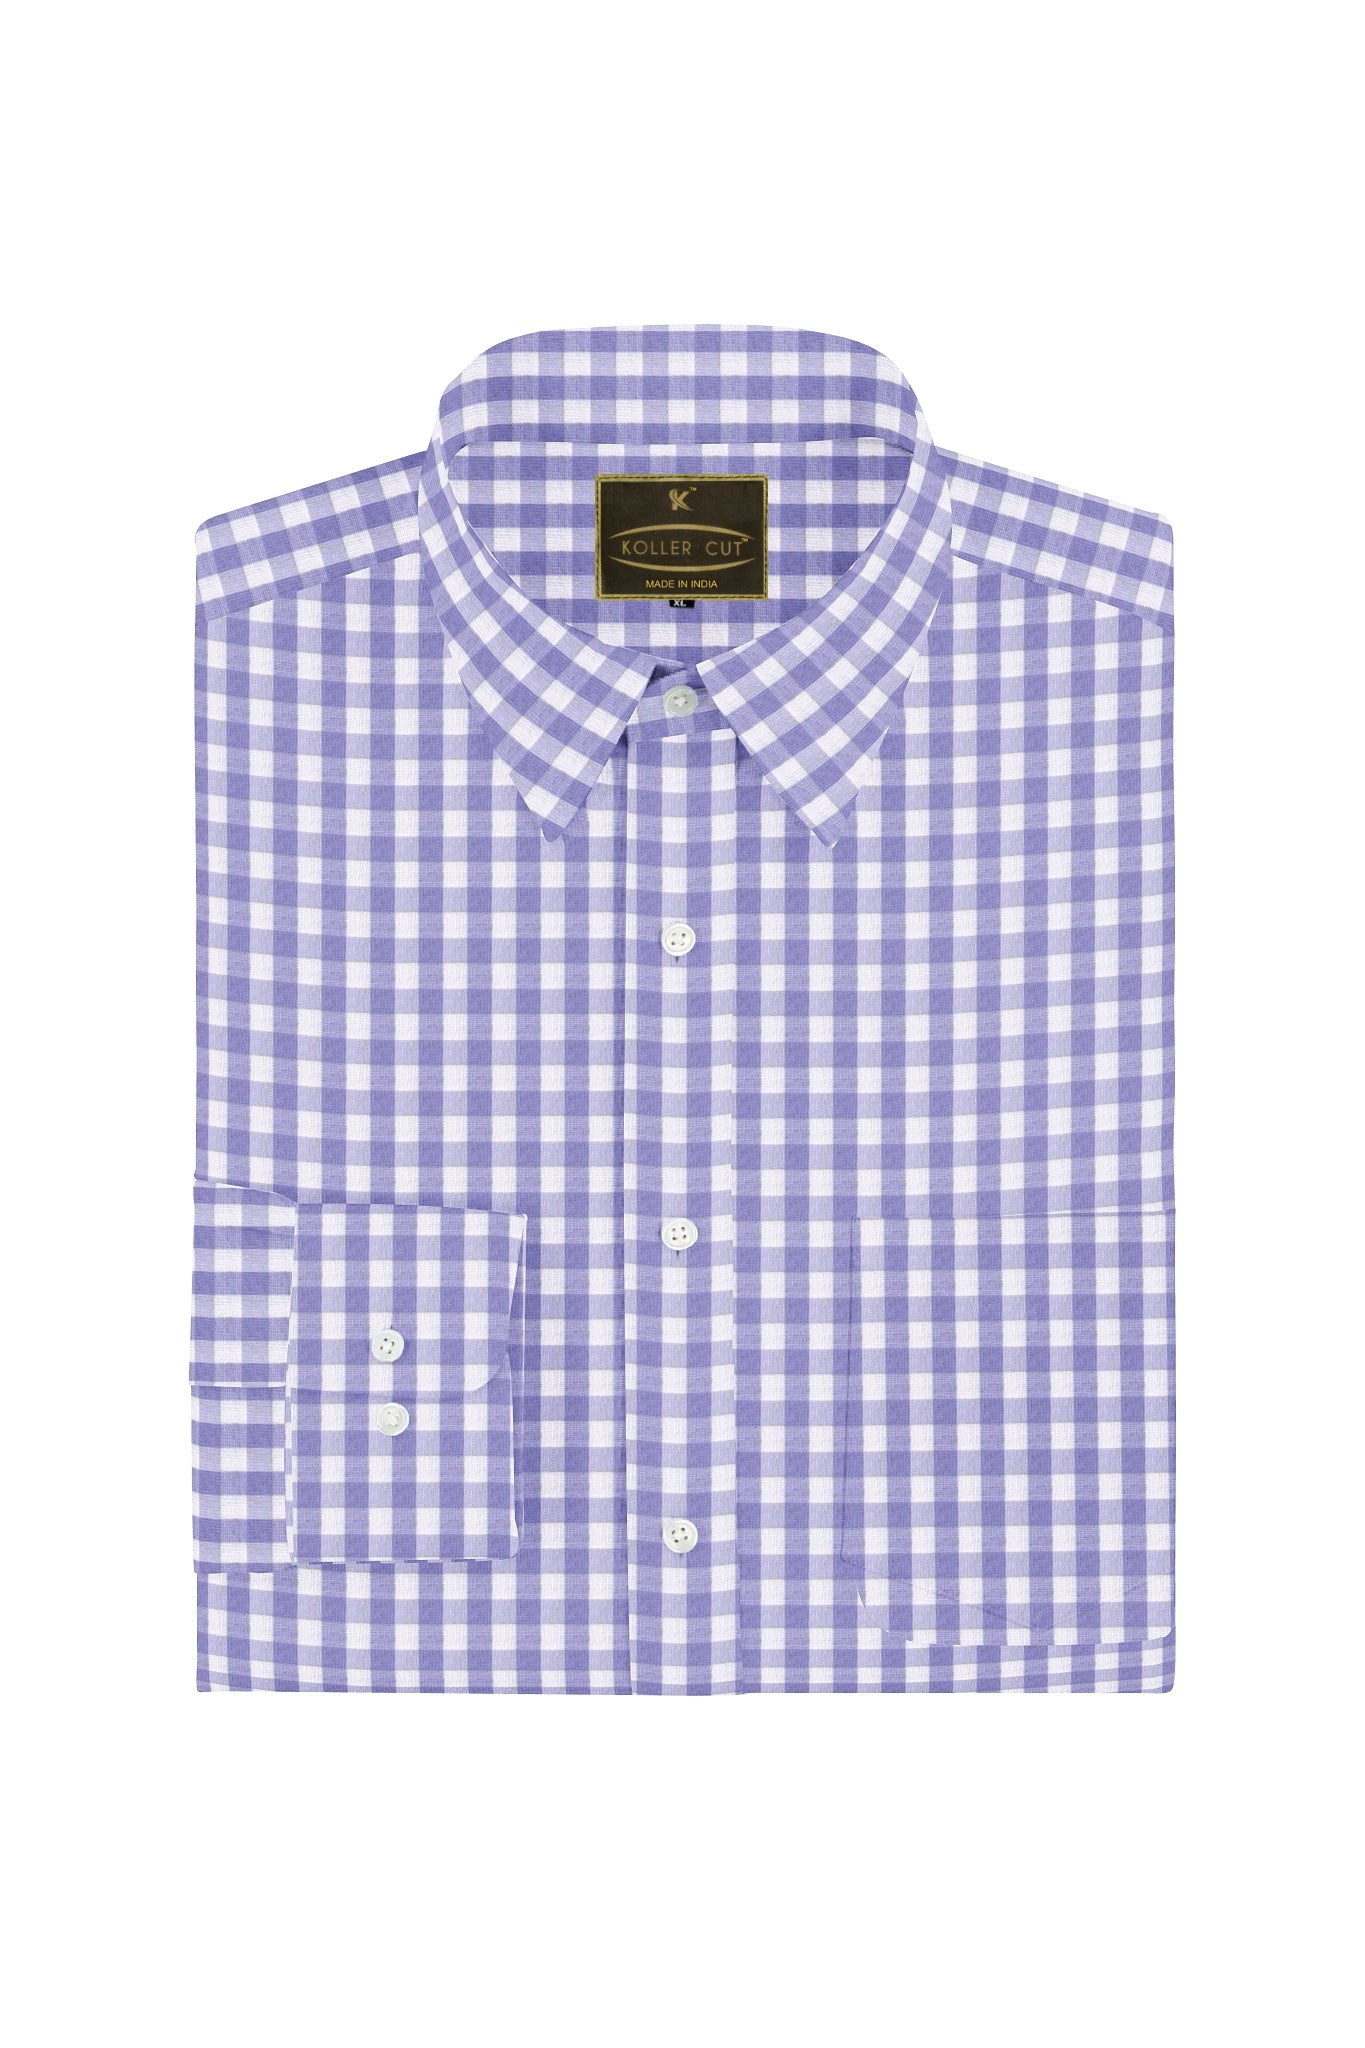 White with Lavender Purple Gingham Checks Cotton Shirt